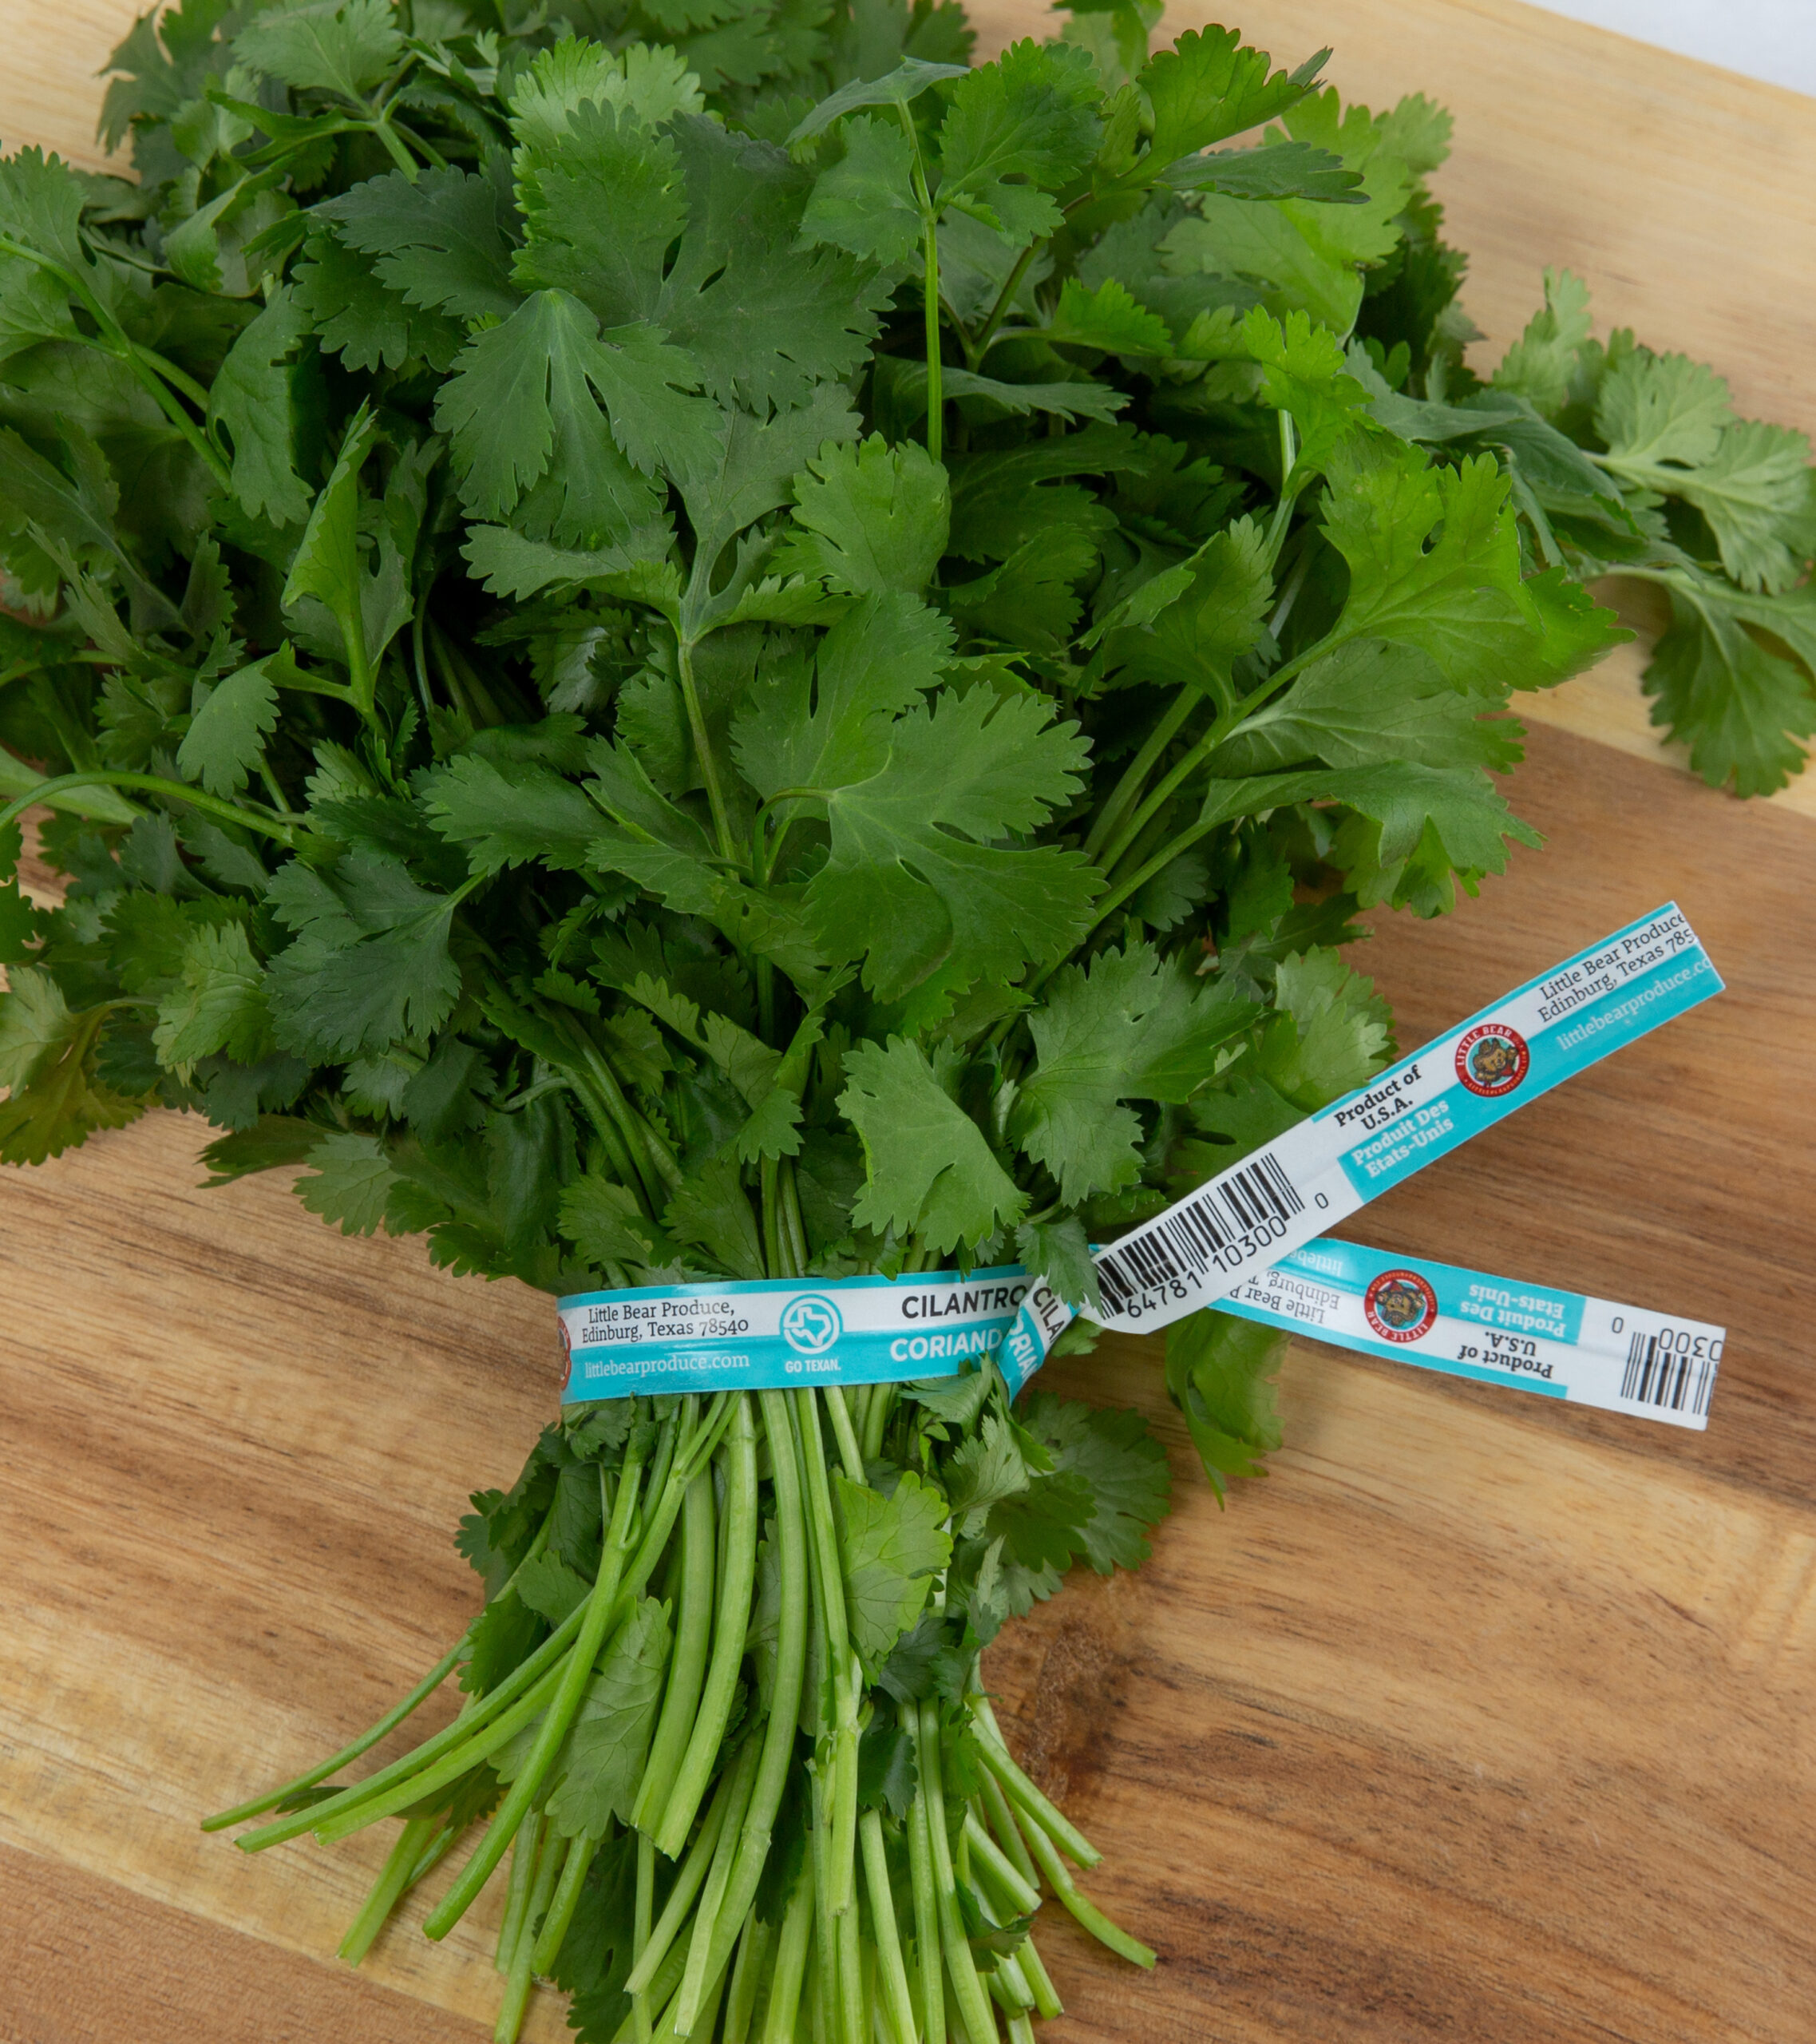 A teal organic produce twist tie bundles a batch of cilantro.